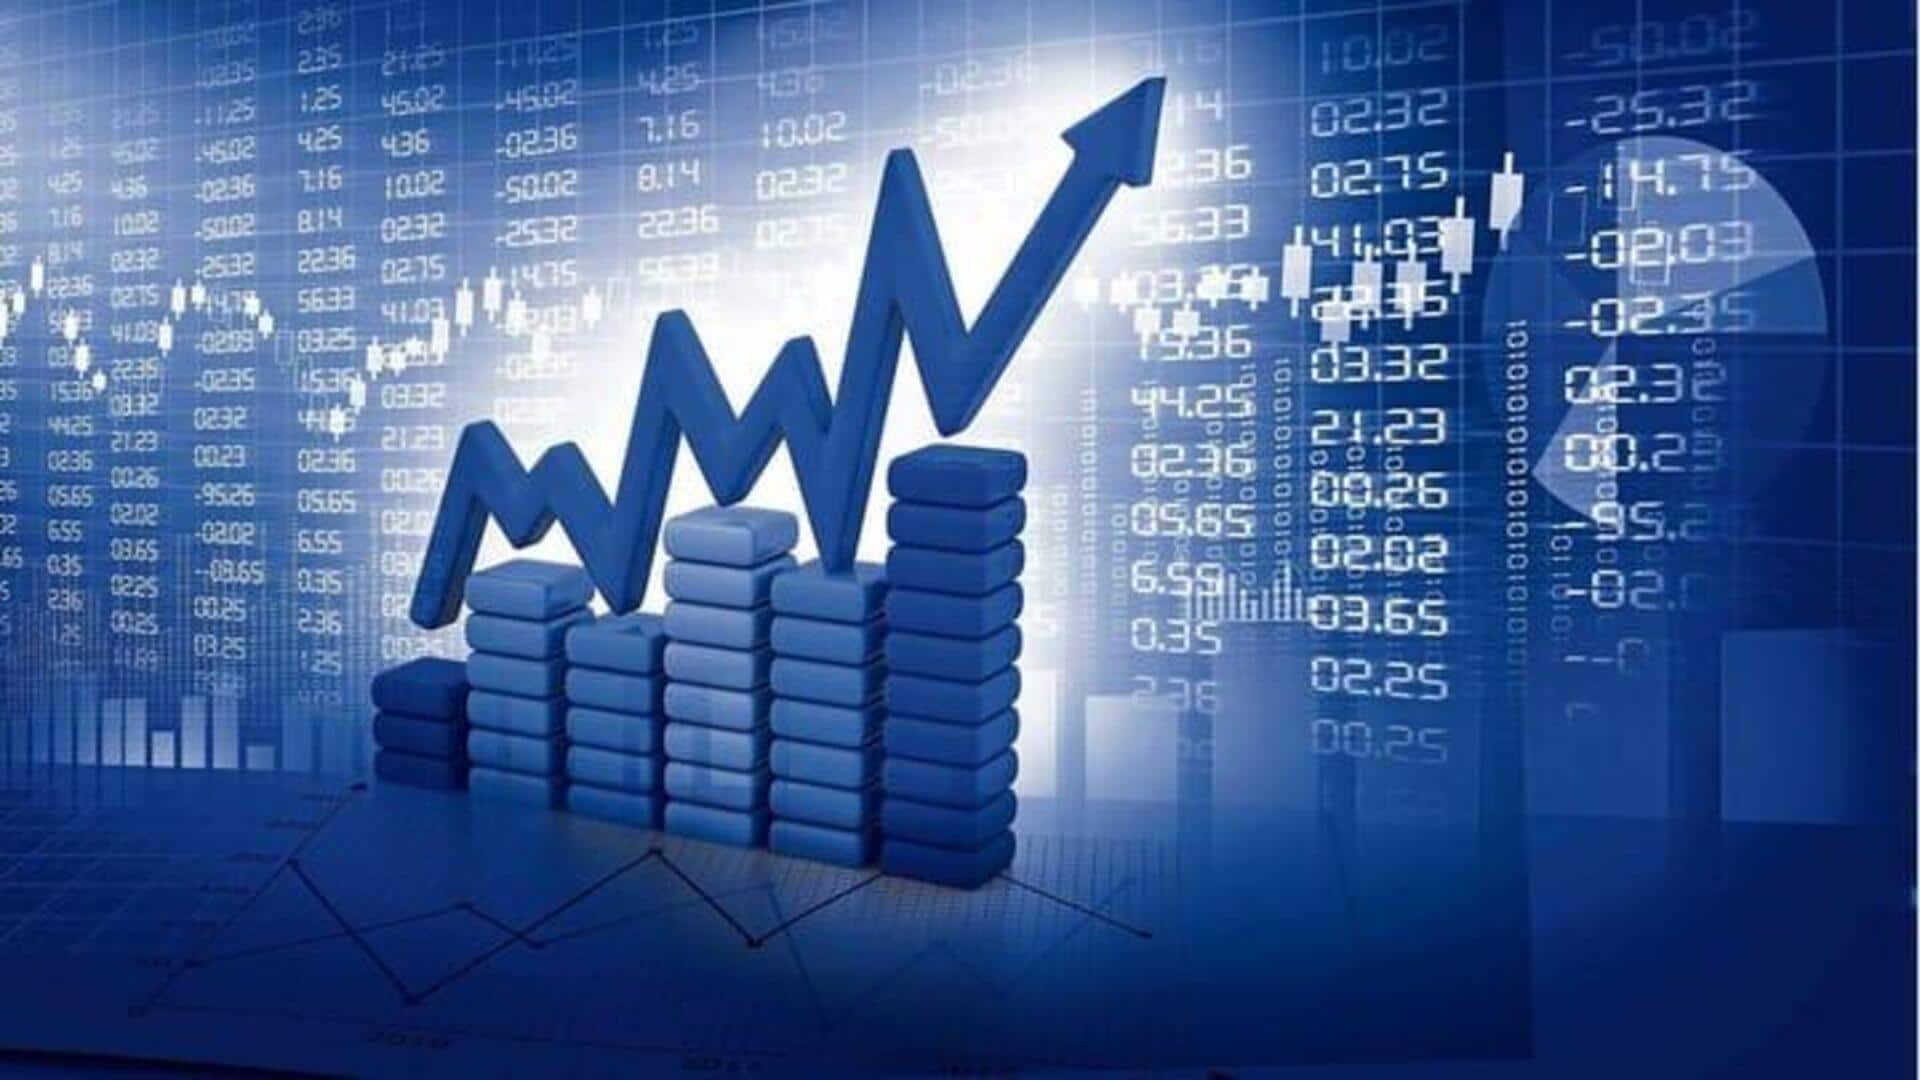 Sensex reaches fresh record high, opens above 80,300